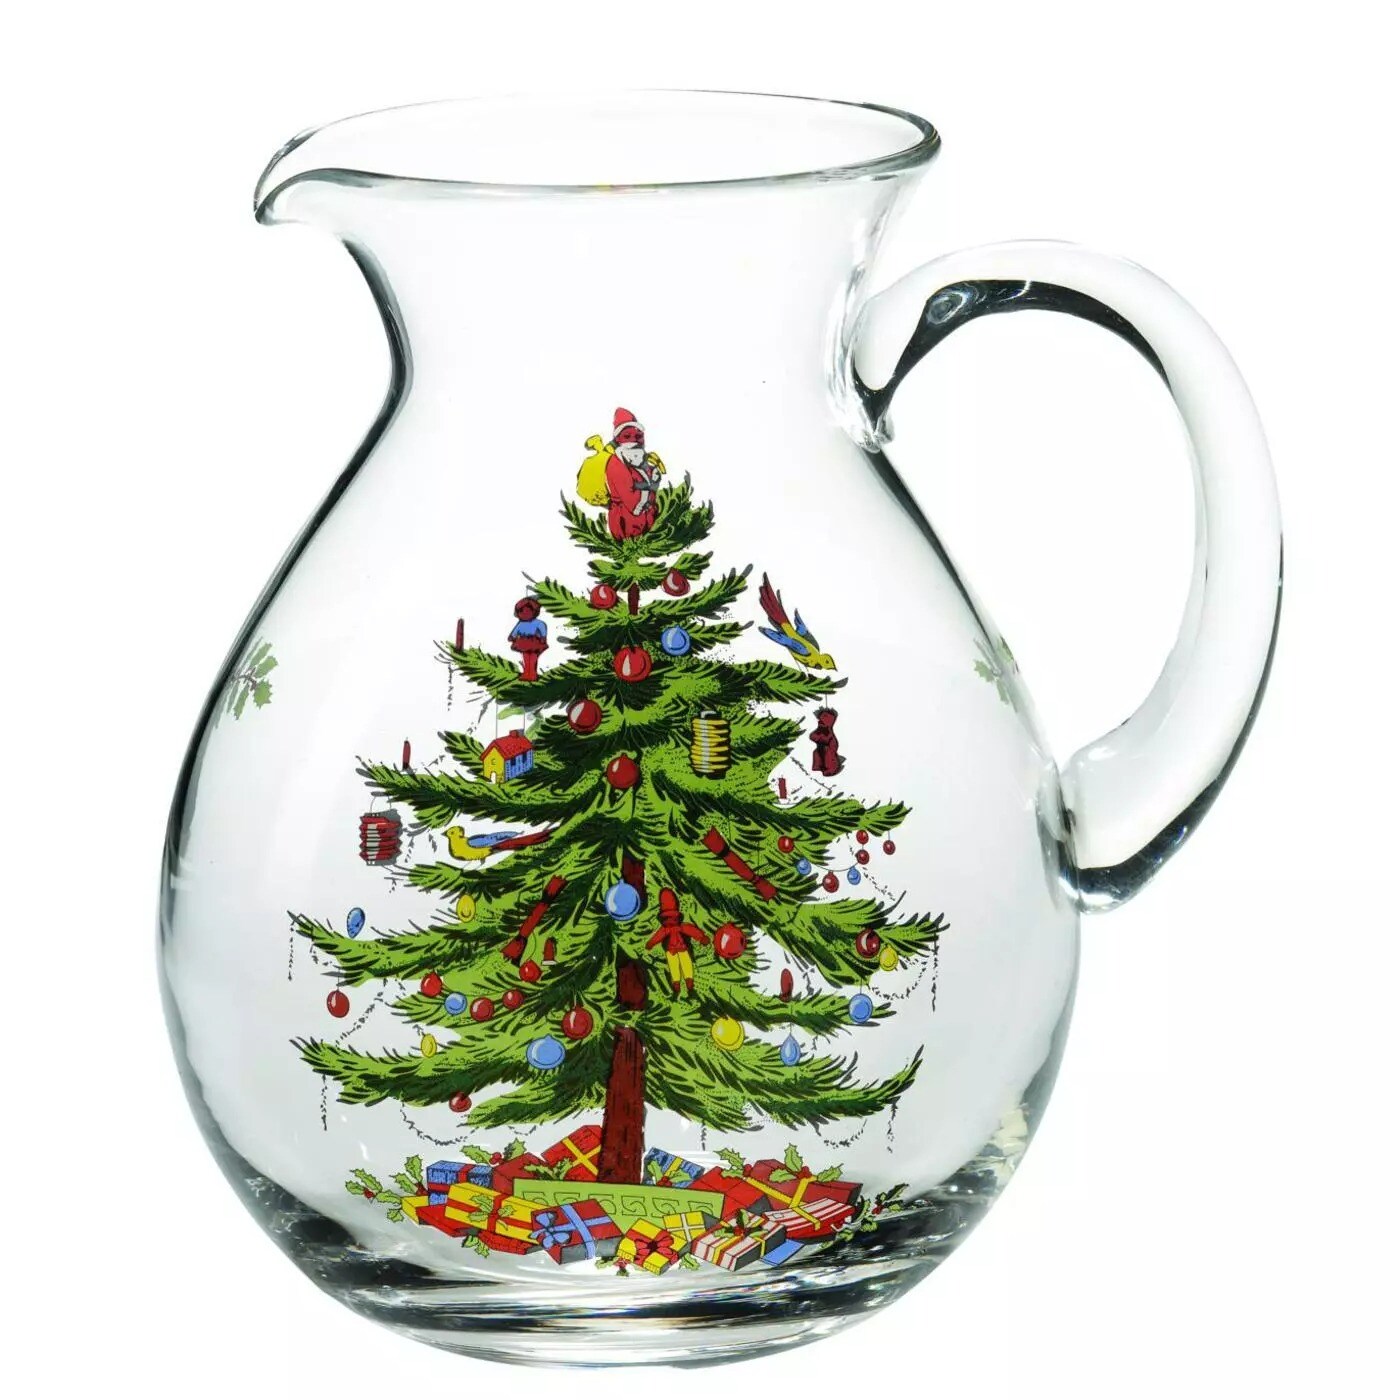 Spode Christmas Tree Santa 6 Pint Glass Pitcher, Handled Decorated Holiday Jug